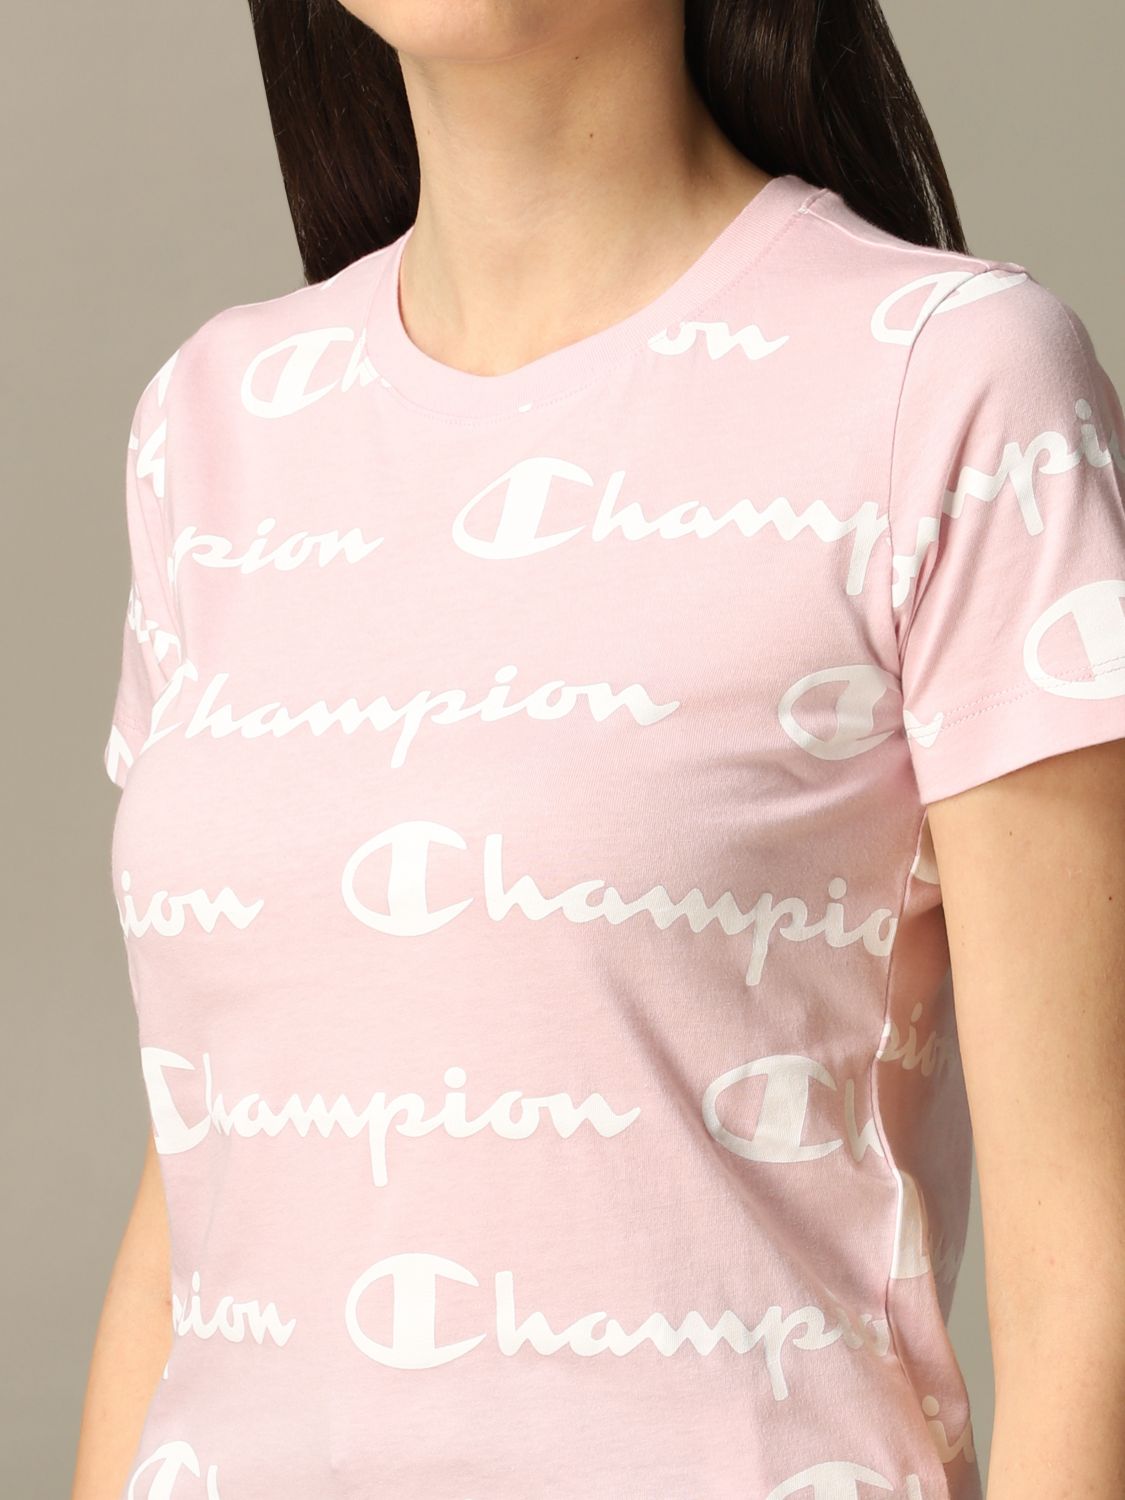 women's champion tee shirts